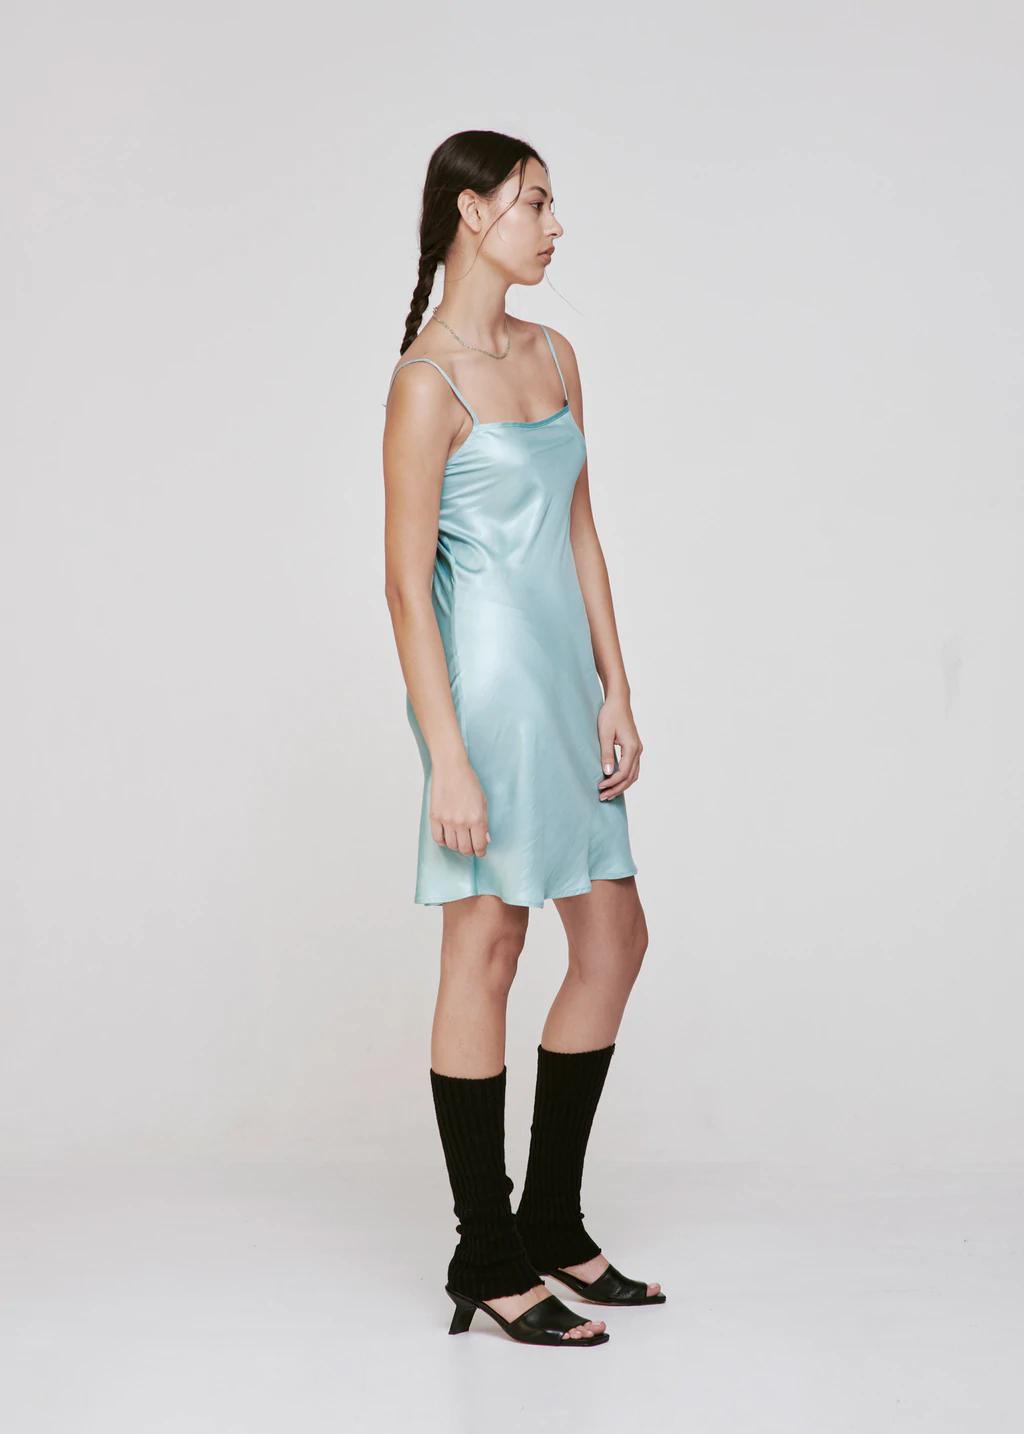 Product Image for Liquid Slip Dress, Teal